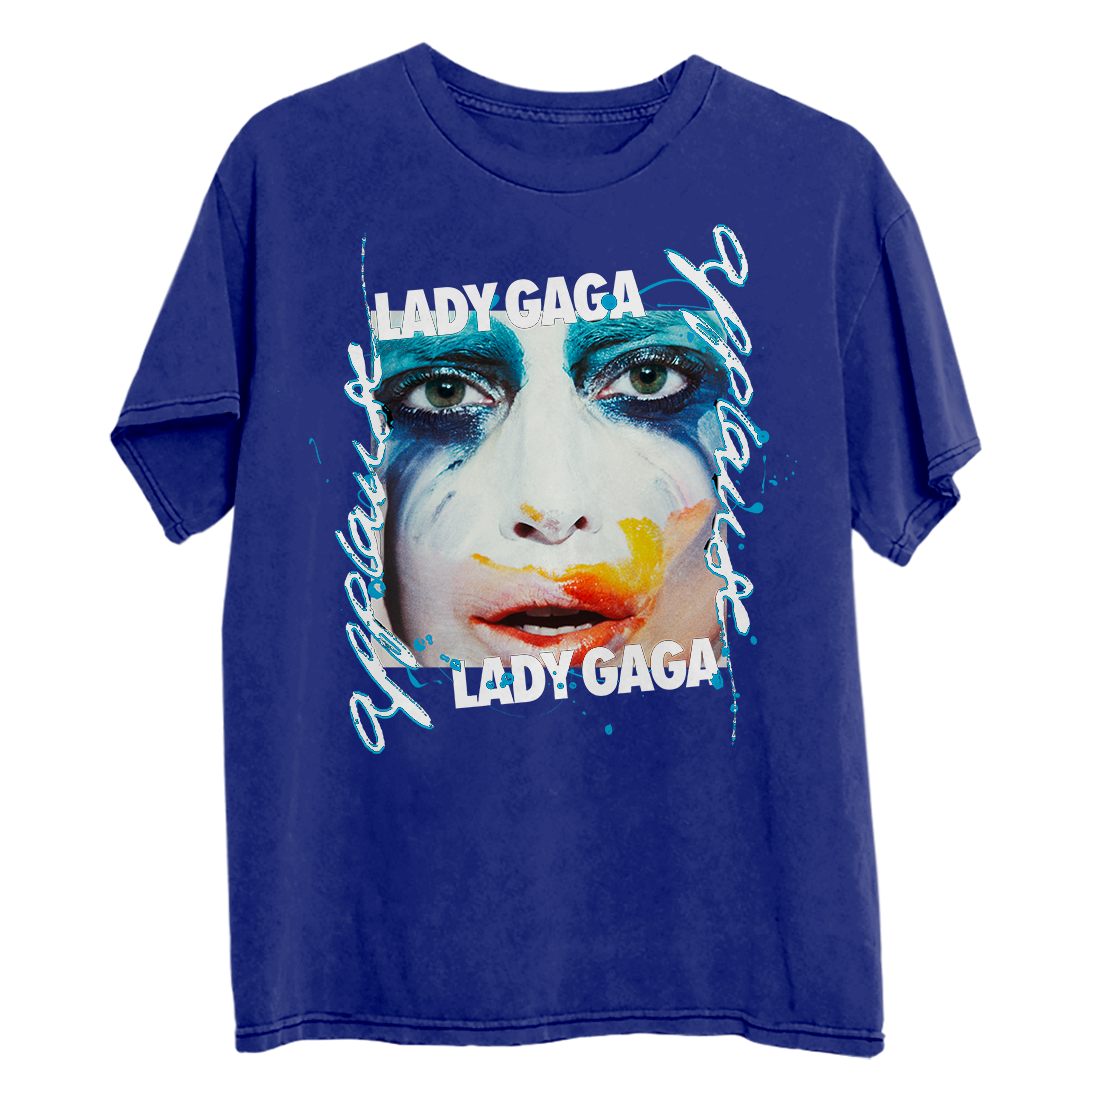 Lady Gaga - Artpop Applause Blue Puff Print T-Shirt